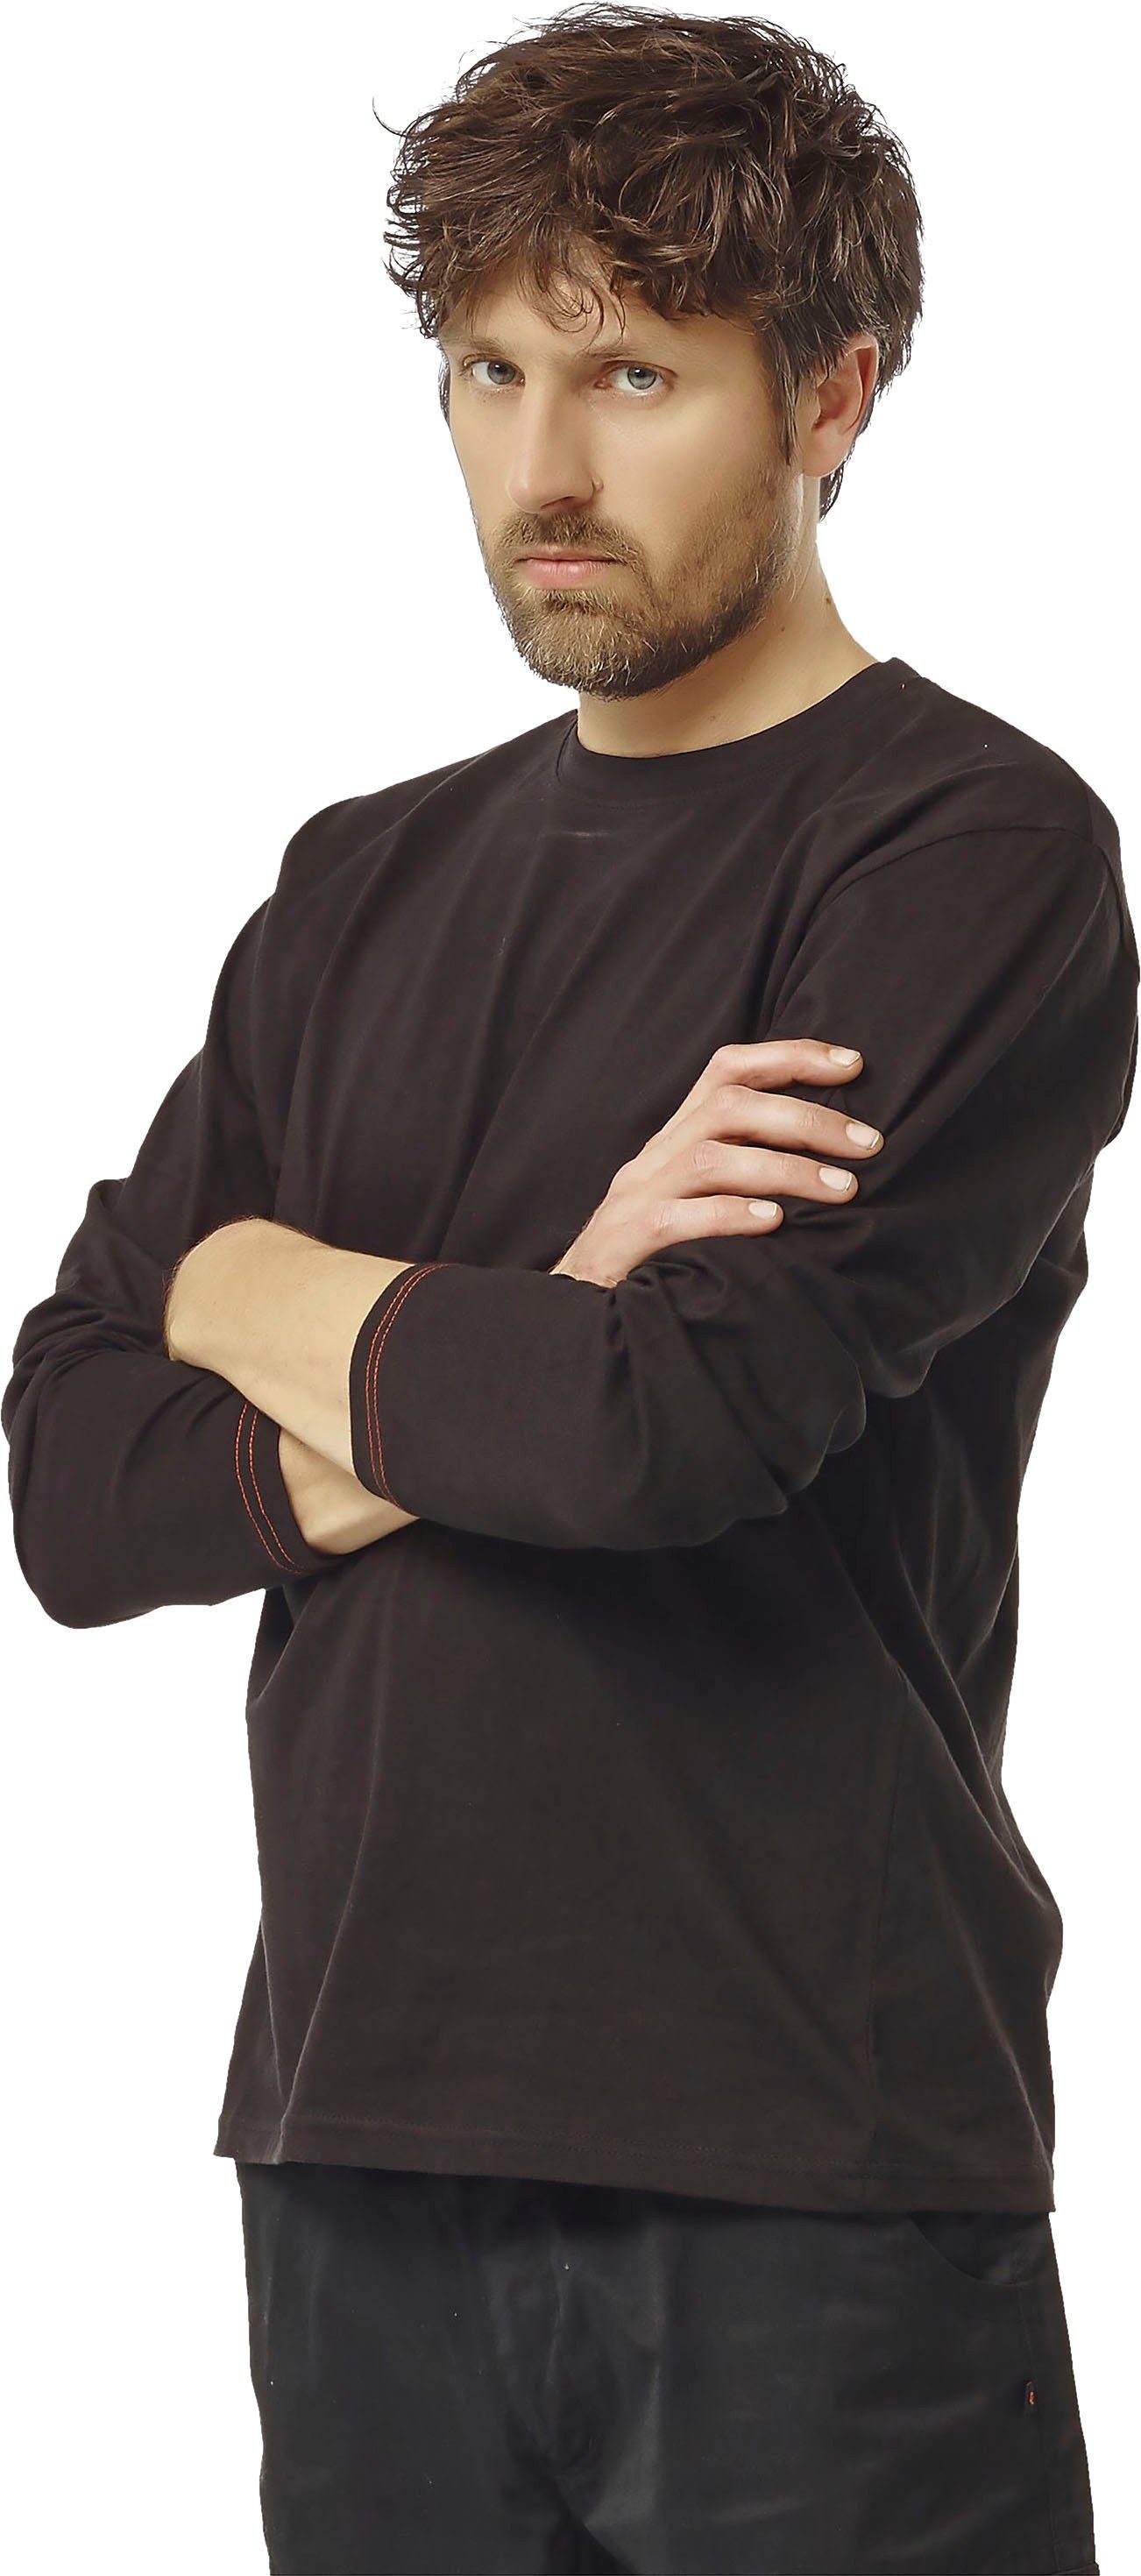 Tragegefühl, langärmlig Basic Langarmshirt vorgeschrumpfte % Noet t-shirt 100 Baumwolle, Herock schwarz angenehmes